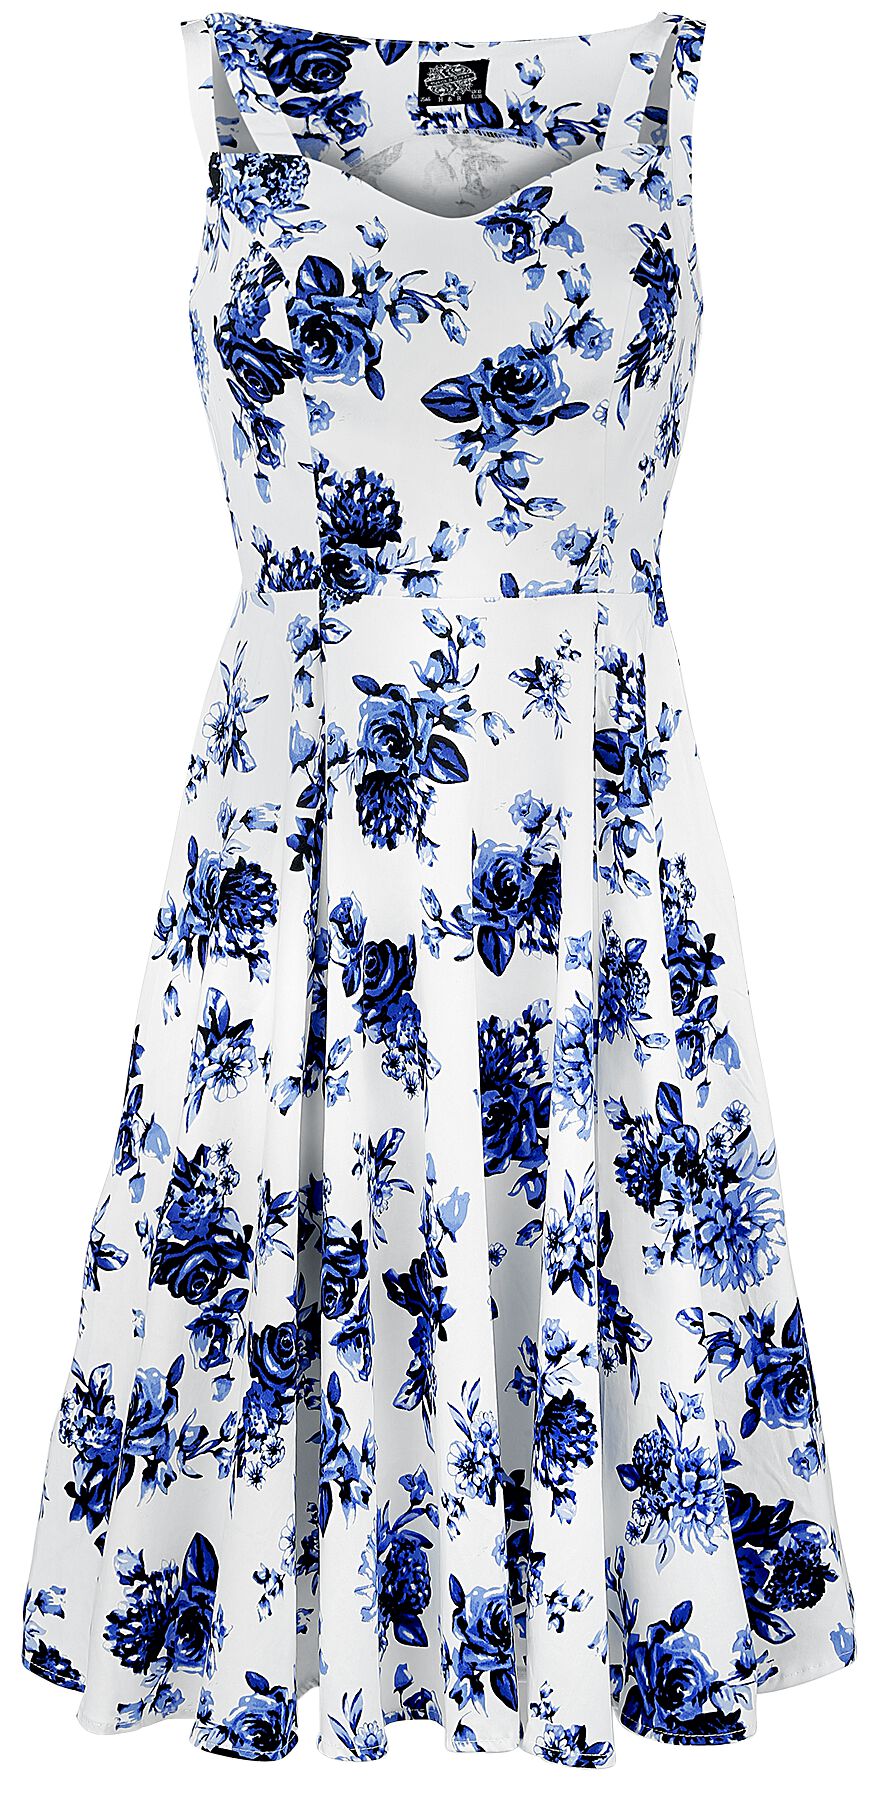 H&R London - Rockabilly Kleid knielang - Blue Rosaceae Swing Dress - S bis 3XL - für Damen - Größe L - multicolor